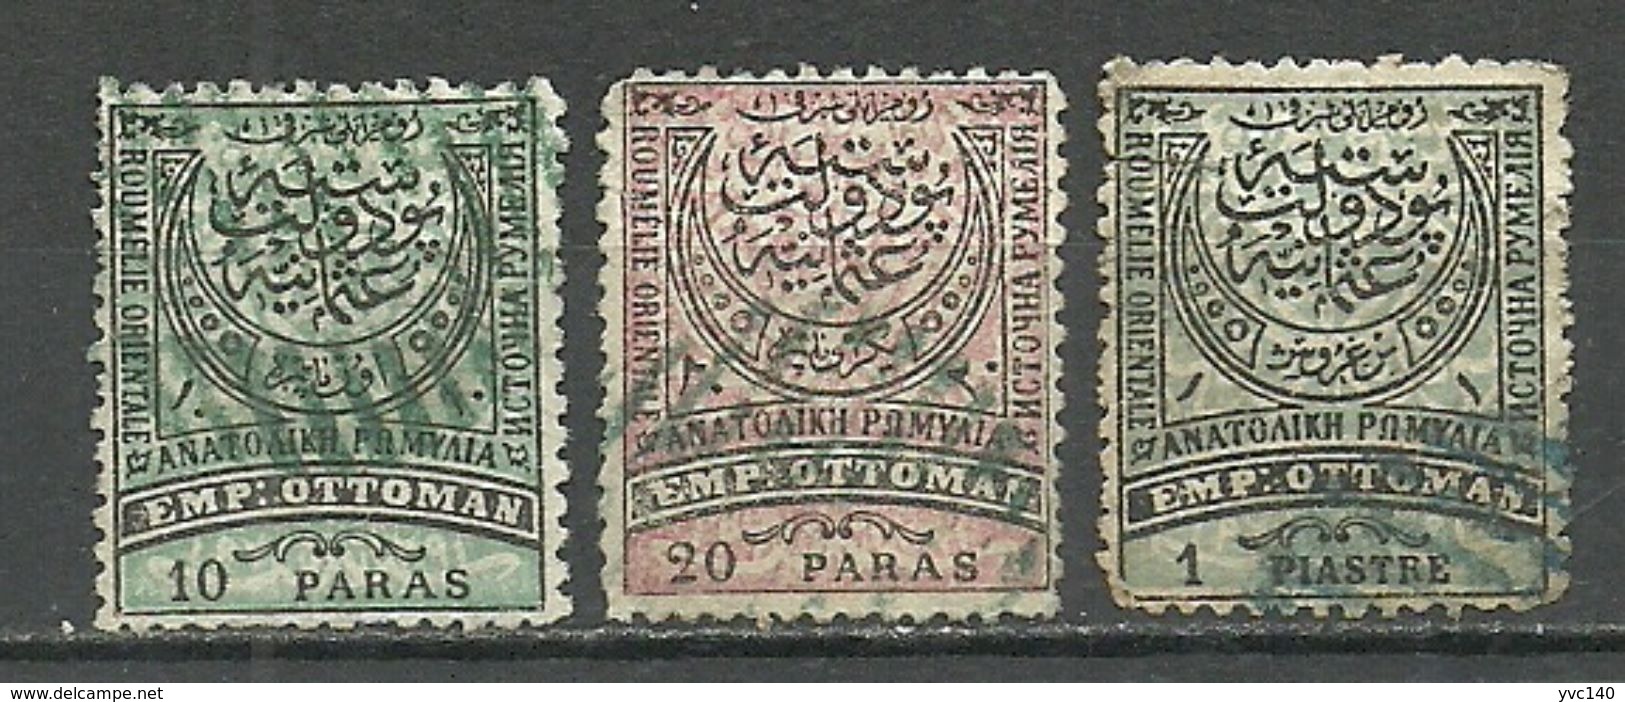 Turkey; 1881 Postage Stamps Of Eastern Roumelia - Used Stamps